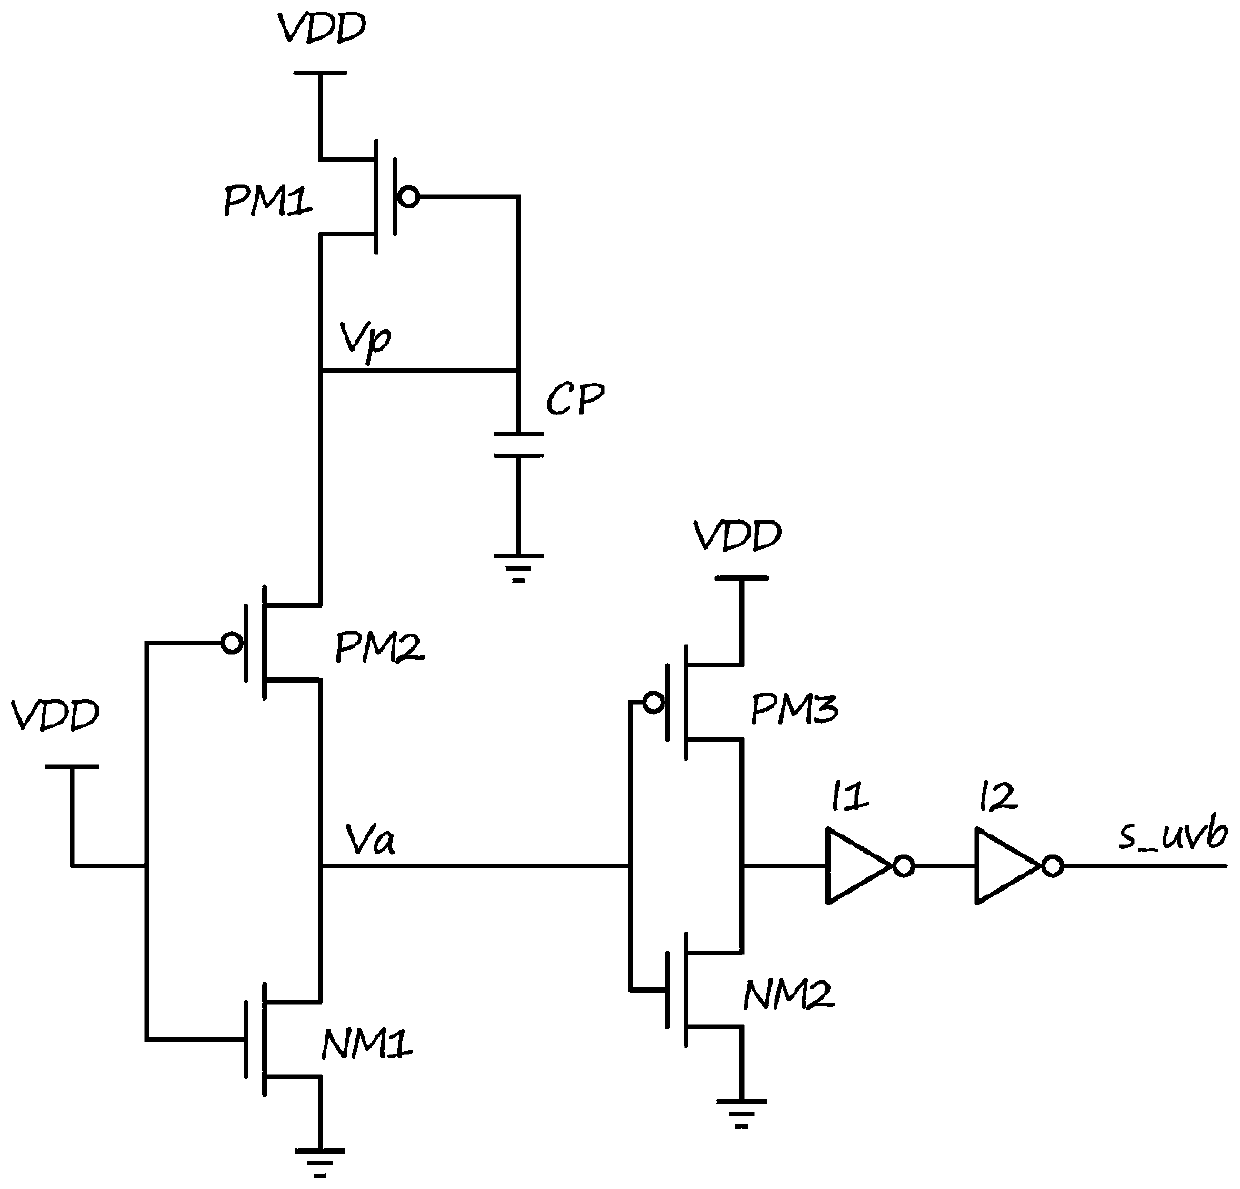 Zero static power consumption undervoltage detection circuit